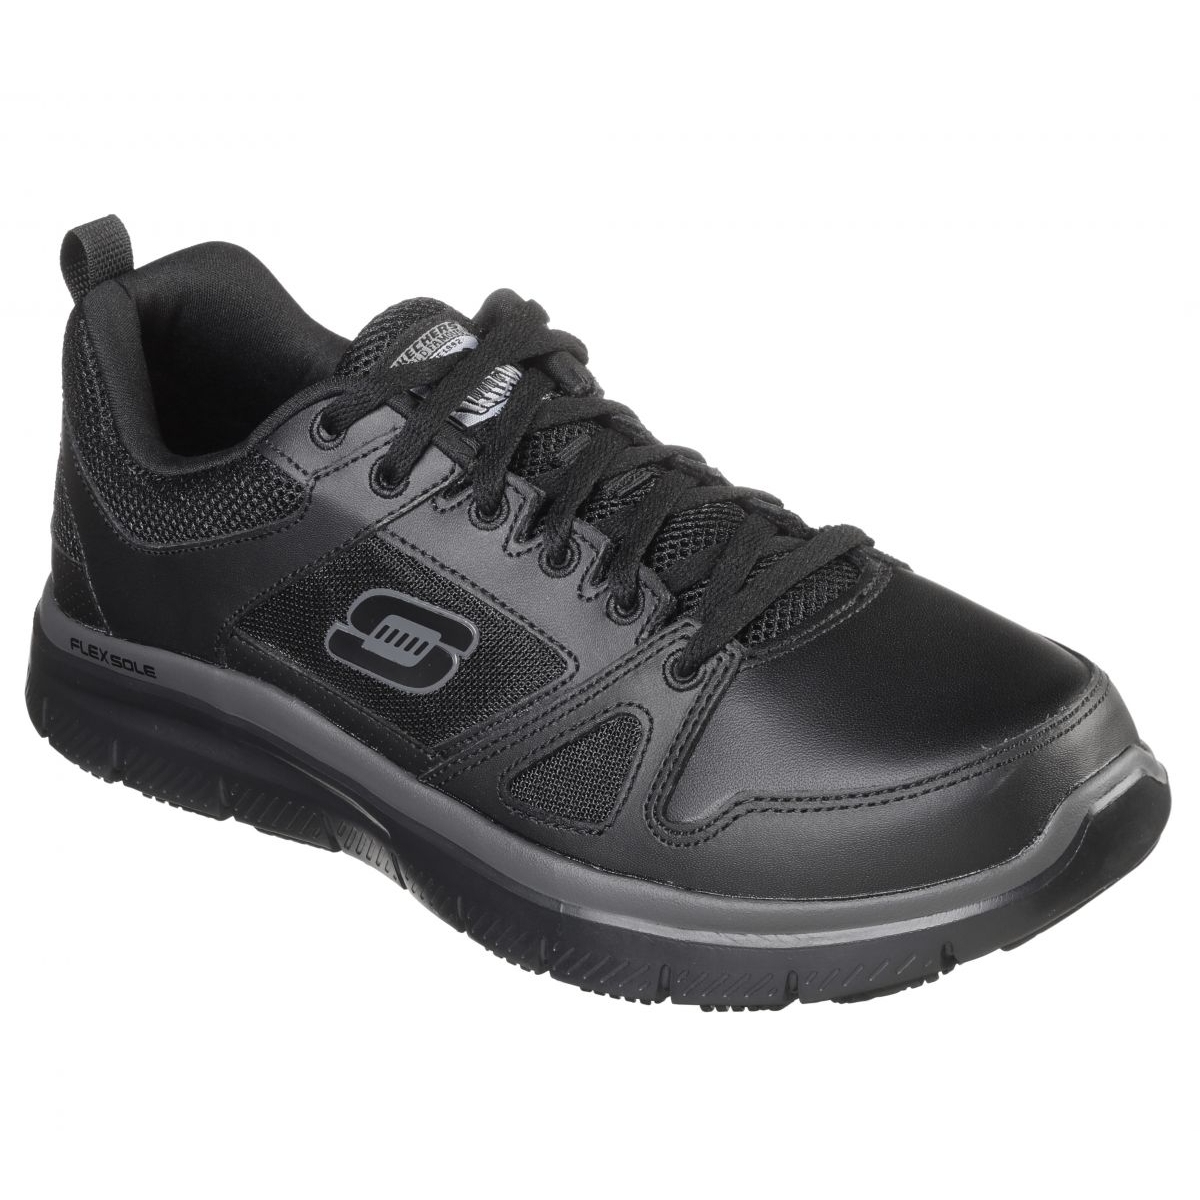 Skechers Men's Flex Advantage SR Work Shoes BLACK - BLACK, 13 Wide